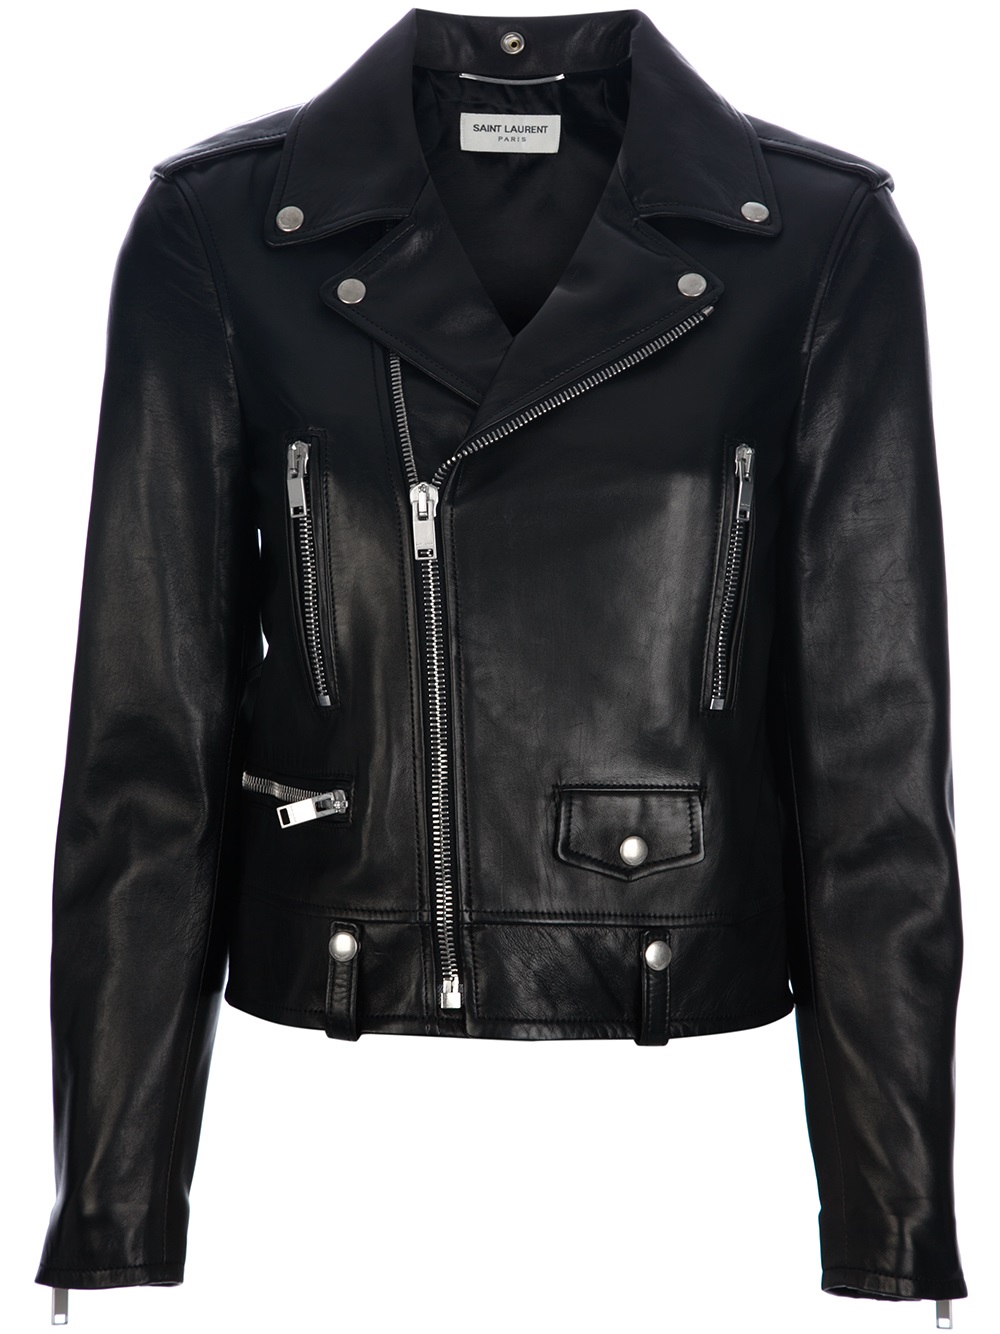 Lyst - Saint Laurent Biker Leather Jacket in Black